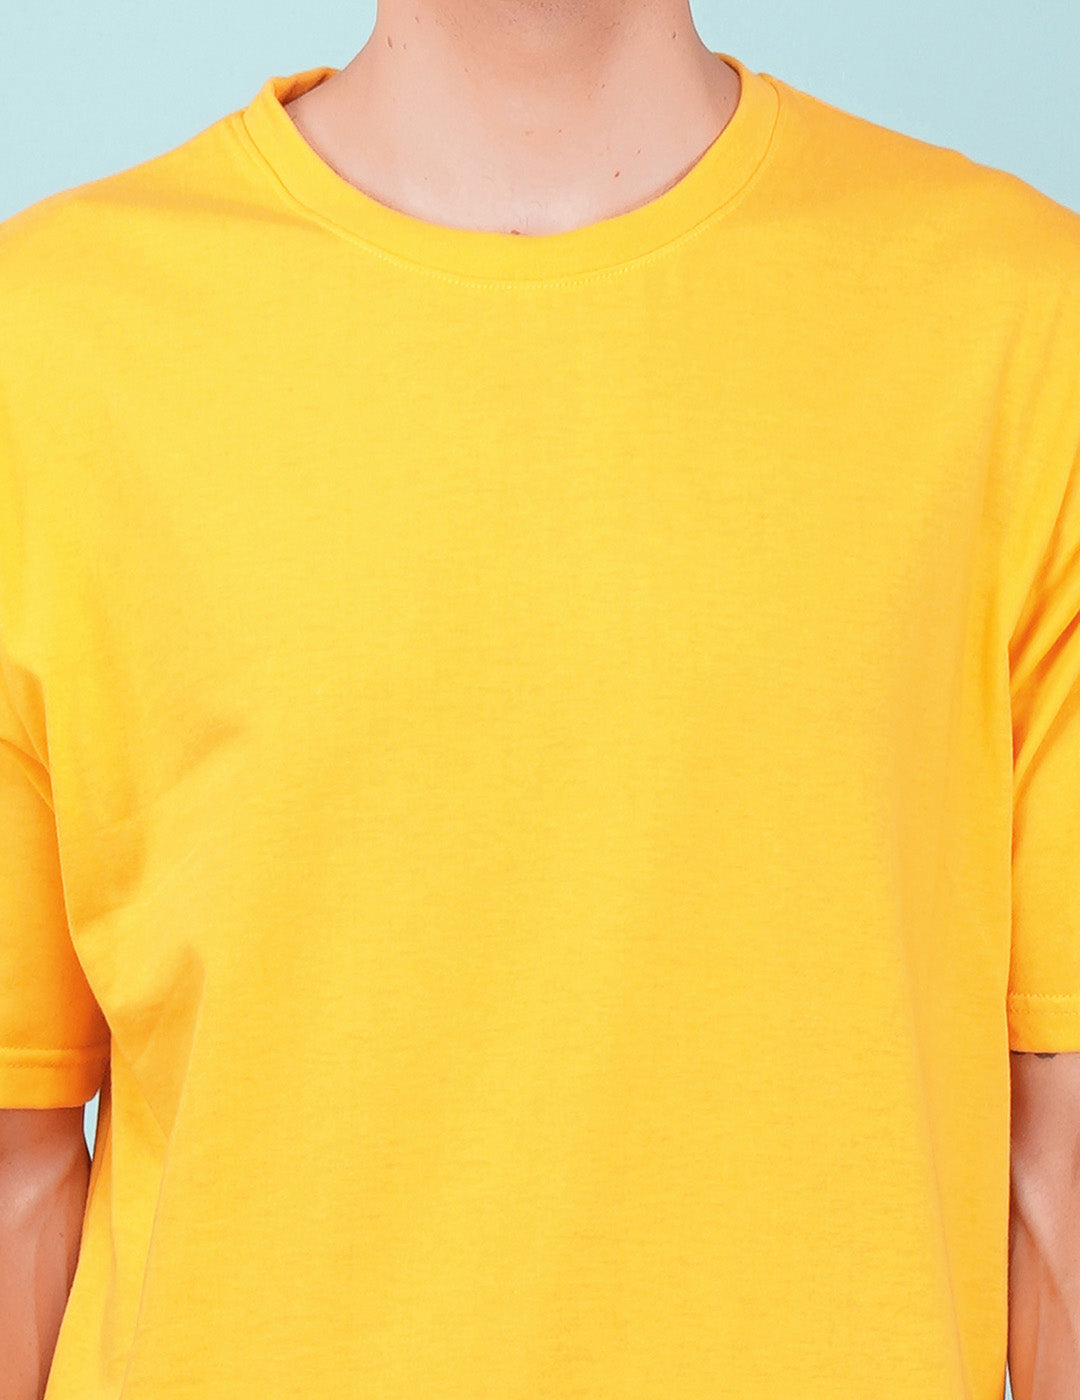 Nusyl Yellow Bad acid back Printed oversized t-shirt